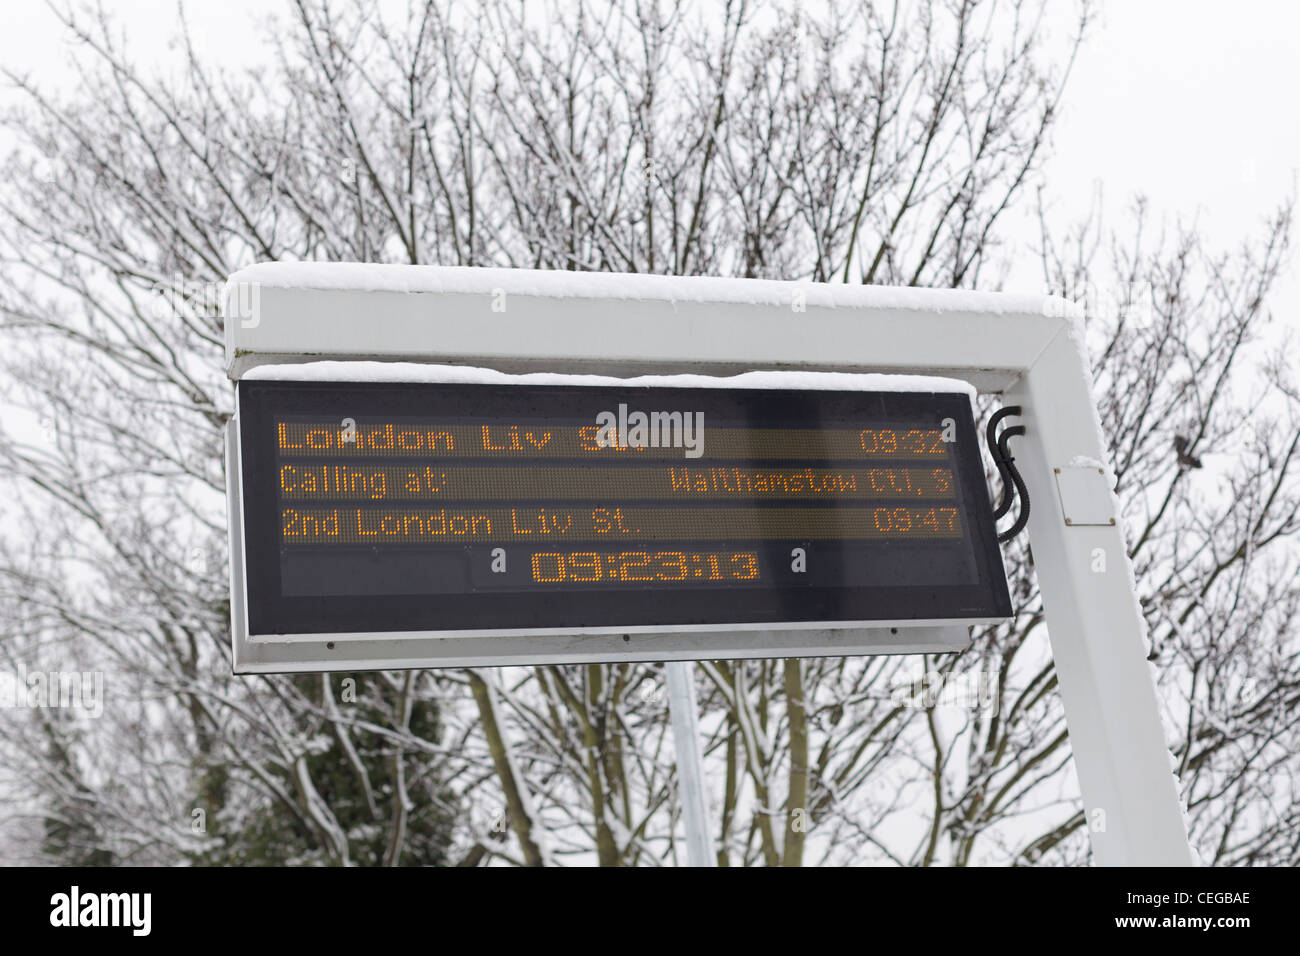 Customer information display on a railway platform in England. Stock Photo